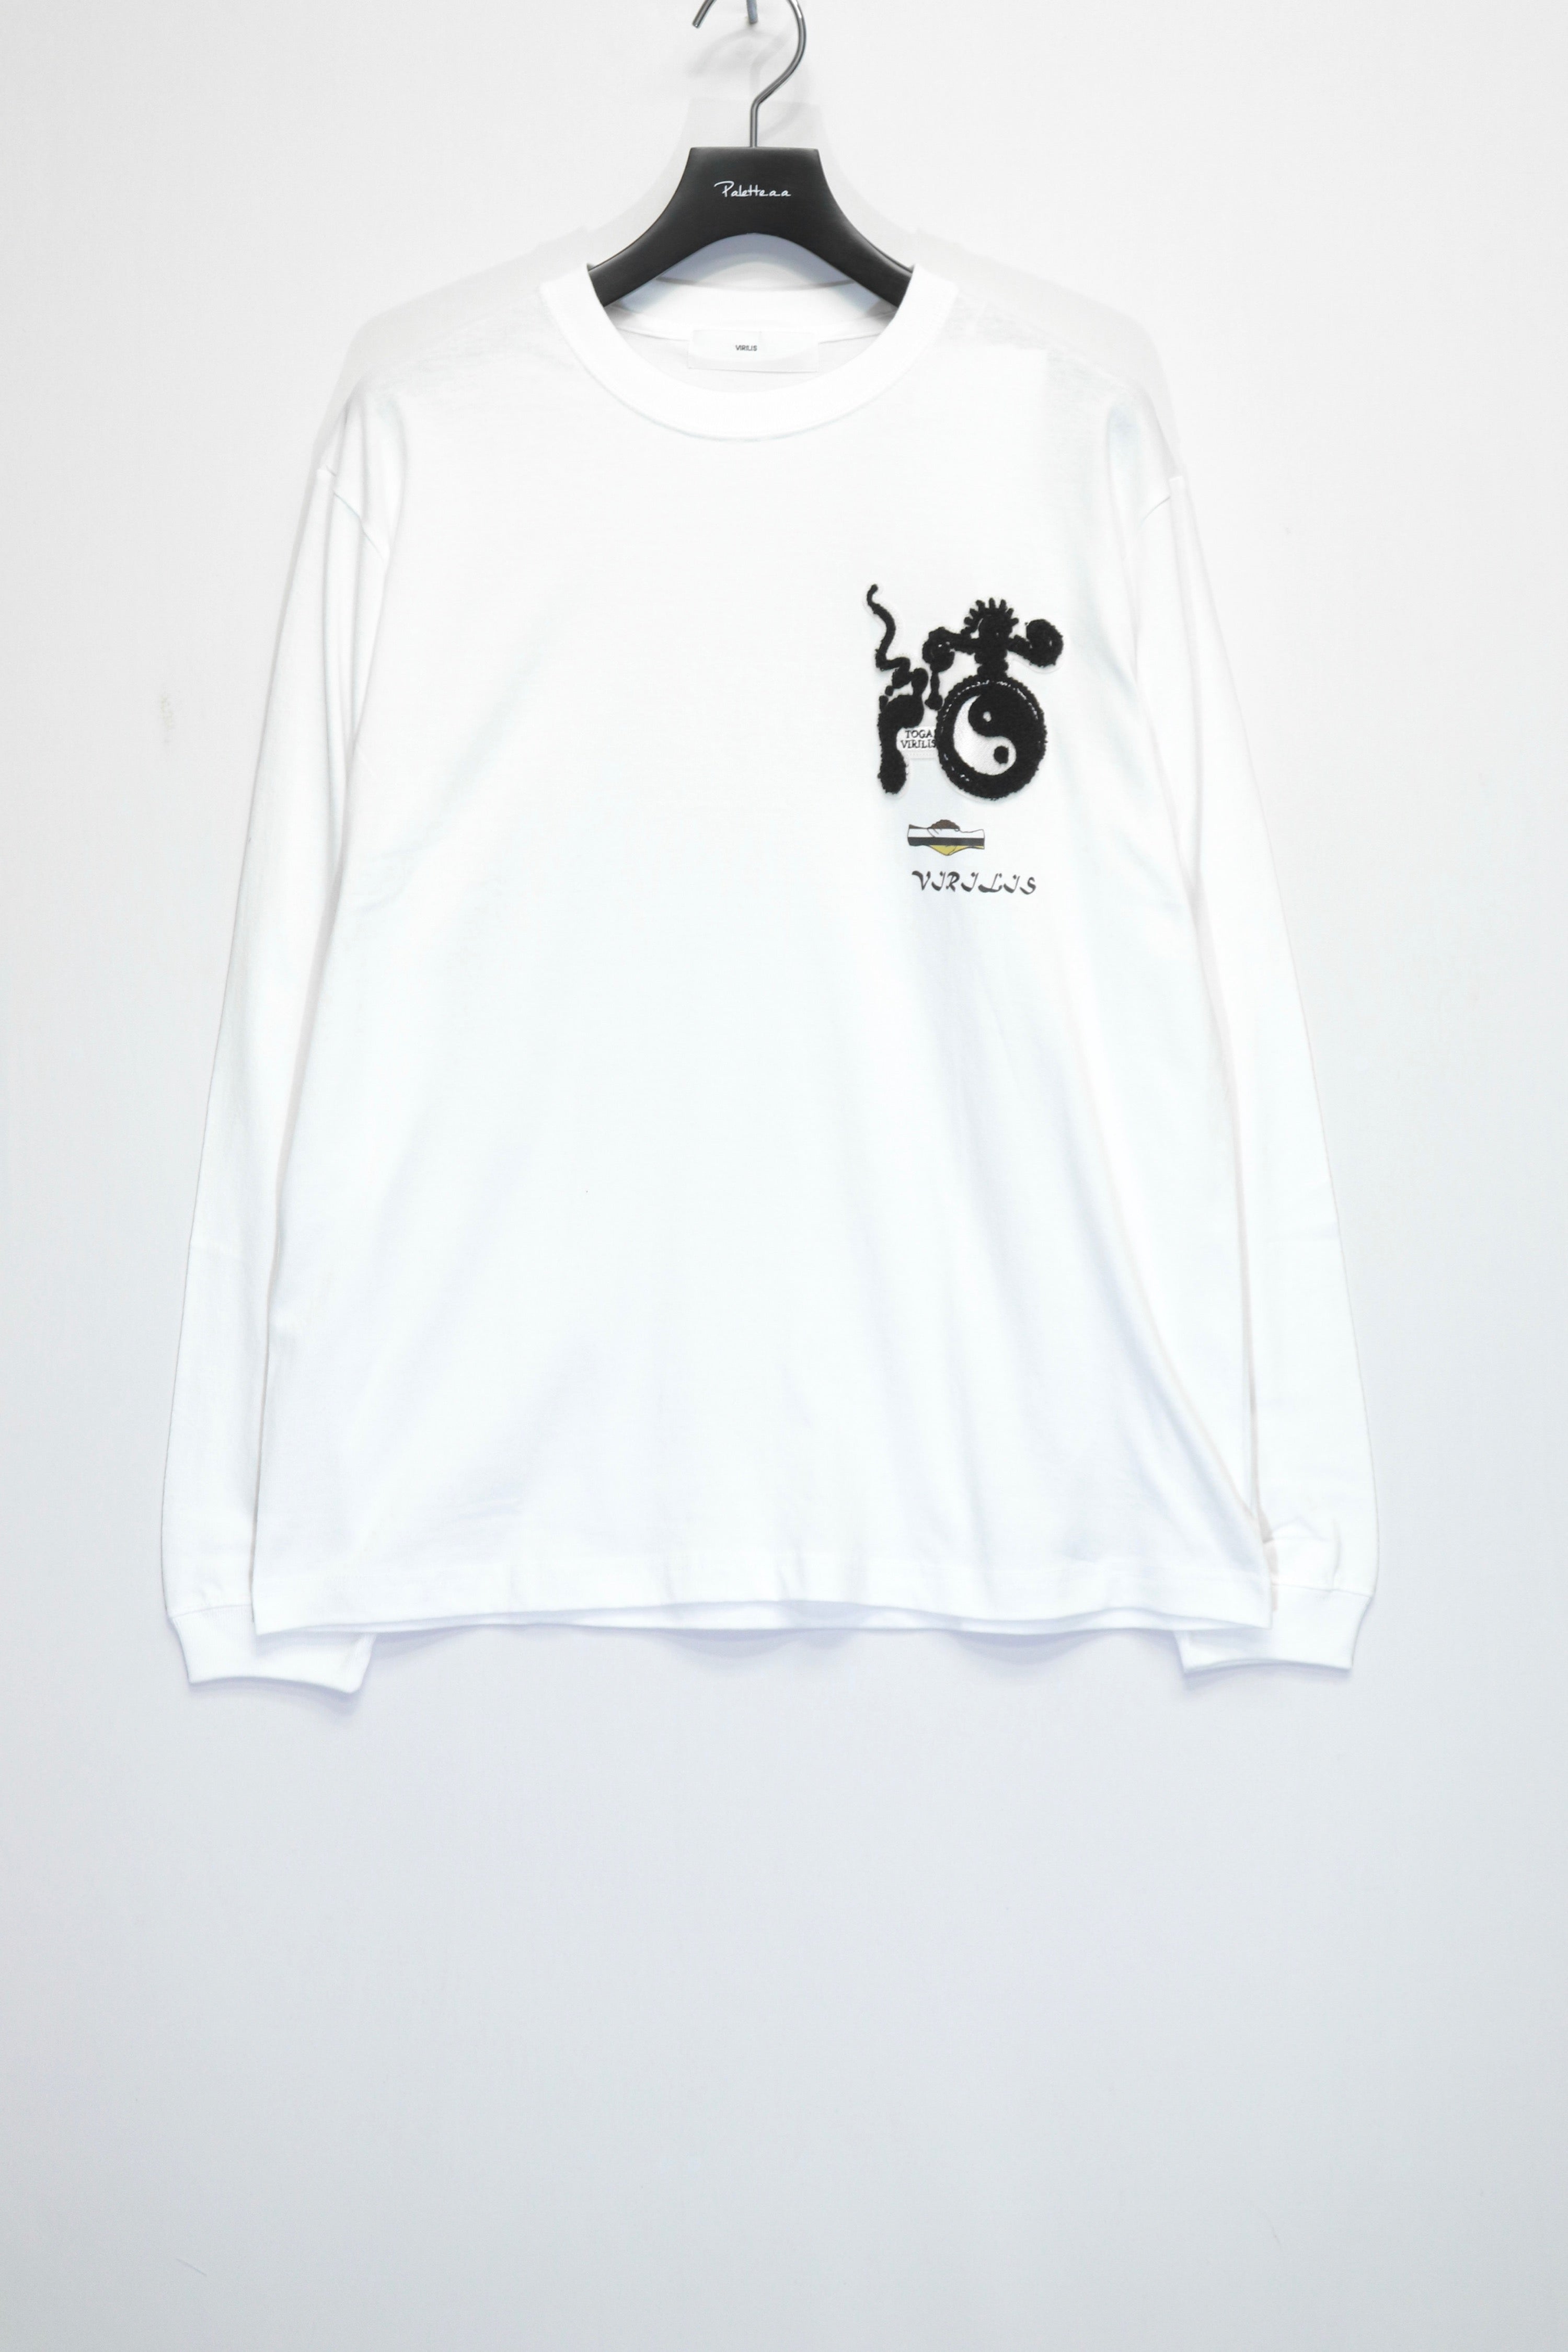 TOGA VIRILIS/トーガビリリース/ Emblem sweatshirt